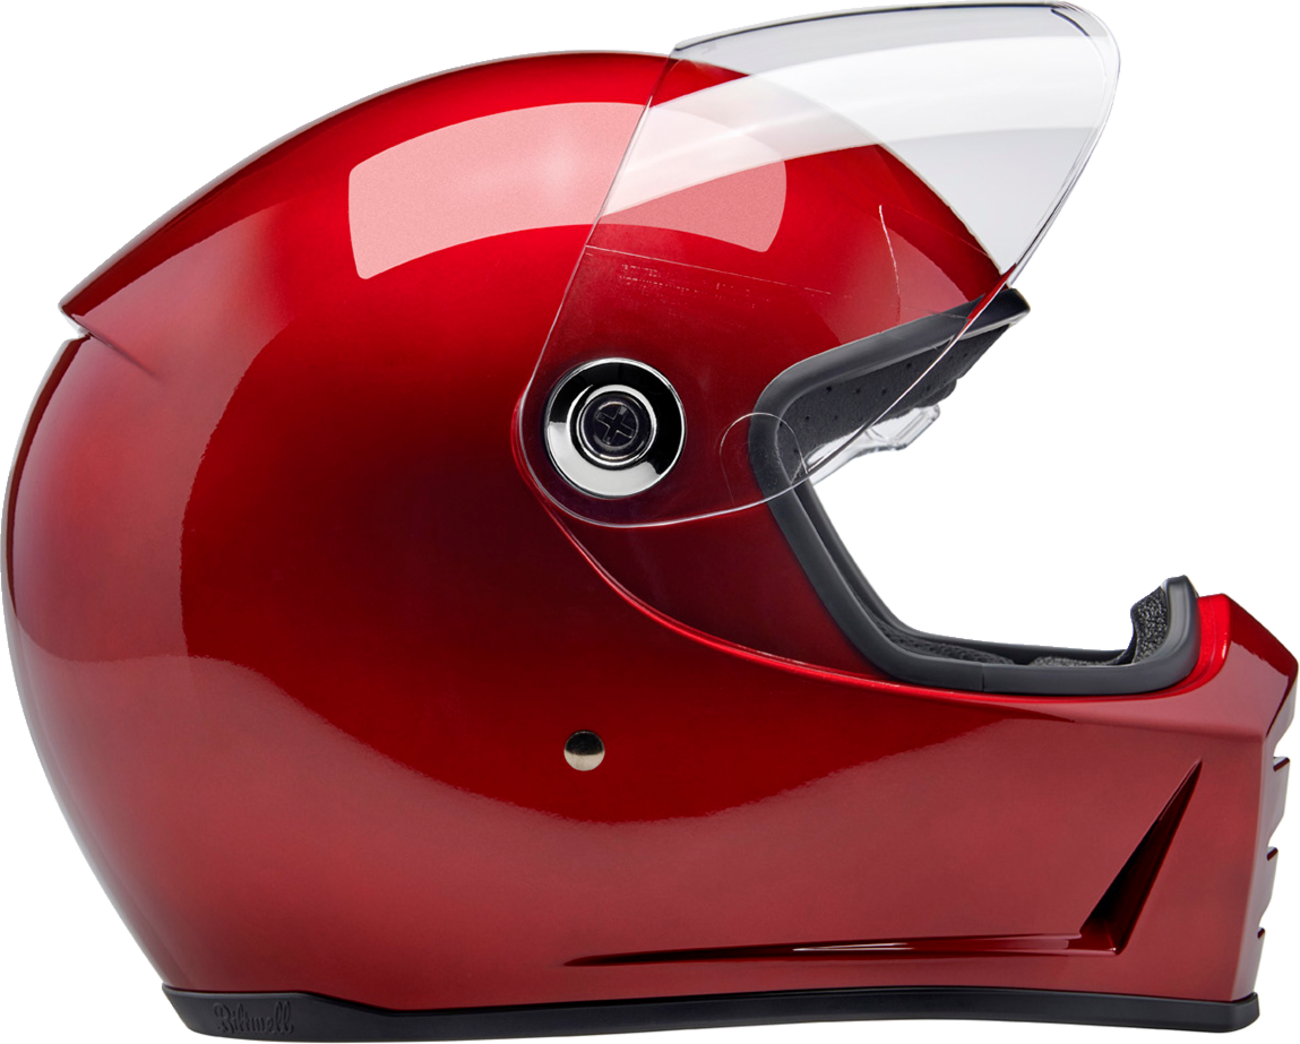 BILTWELL Lane Splitter Helmet - Metallic Cherry Red - 2XL 1004-351-506